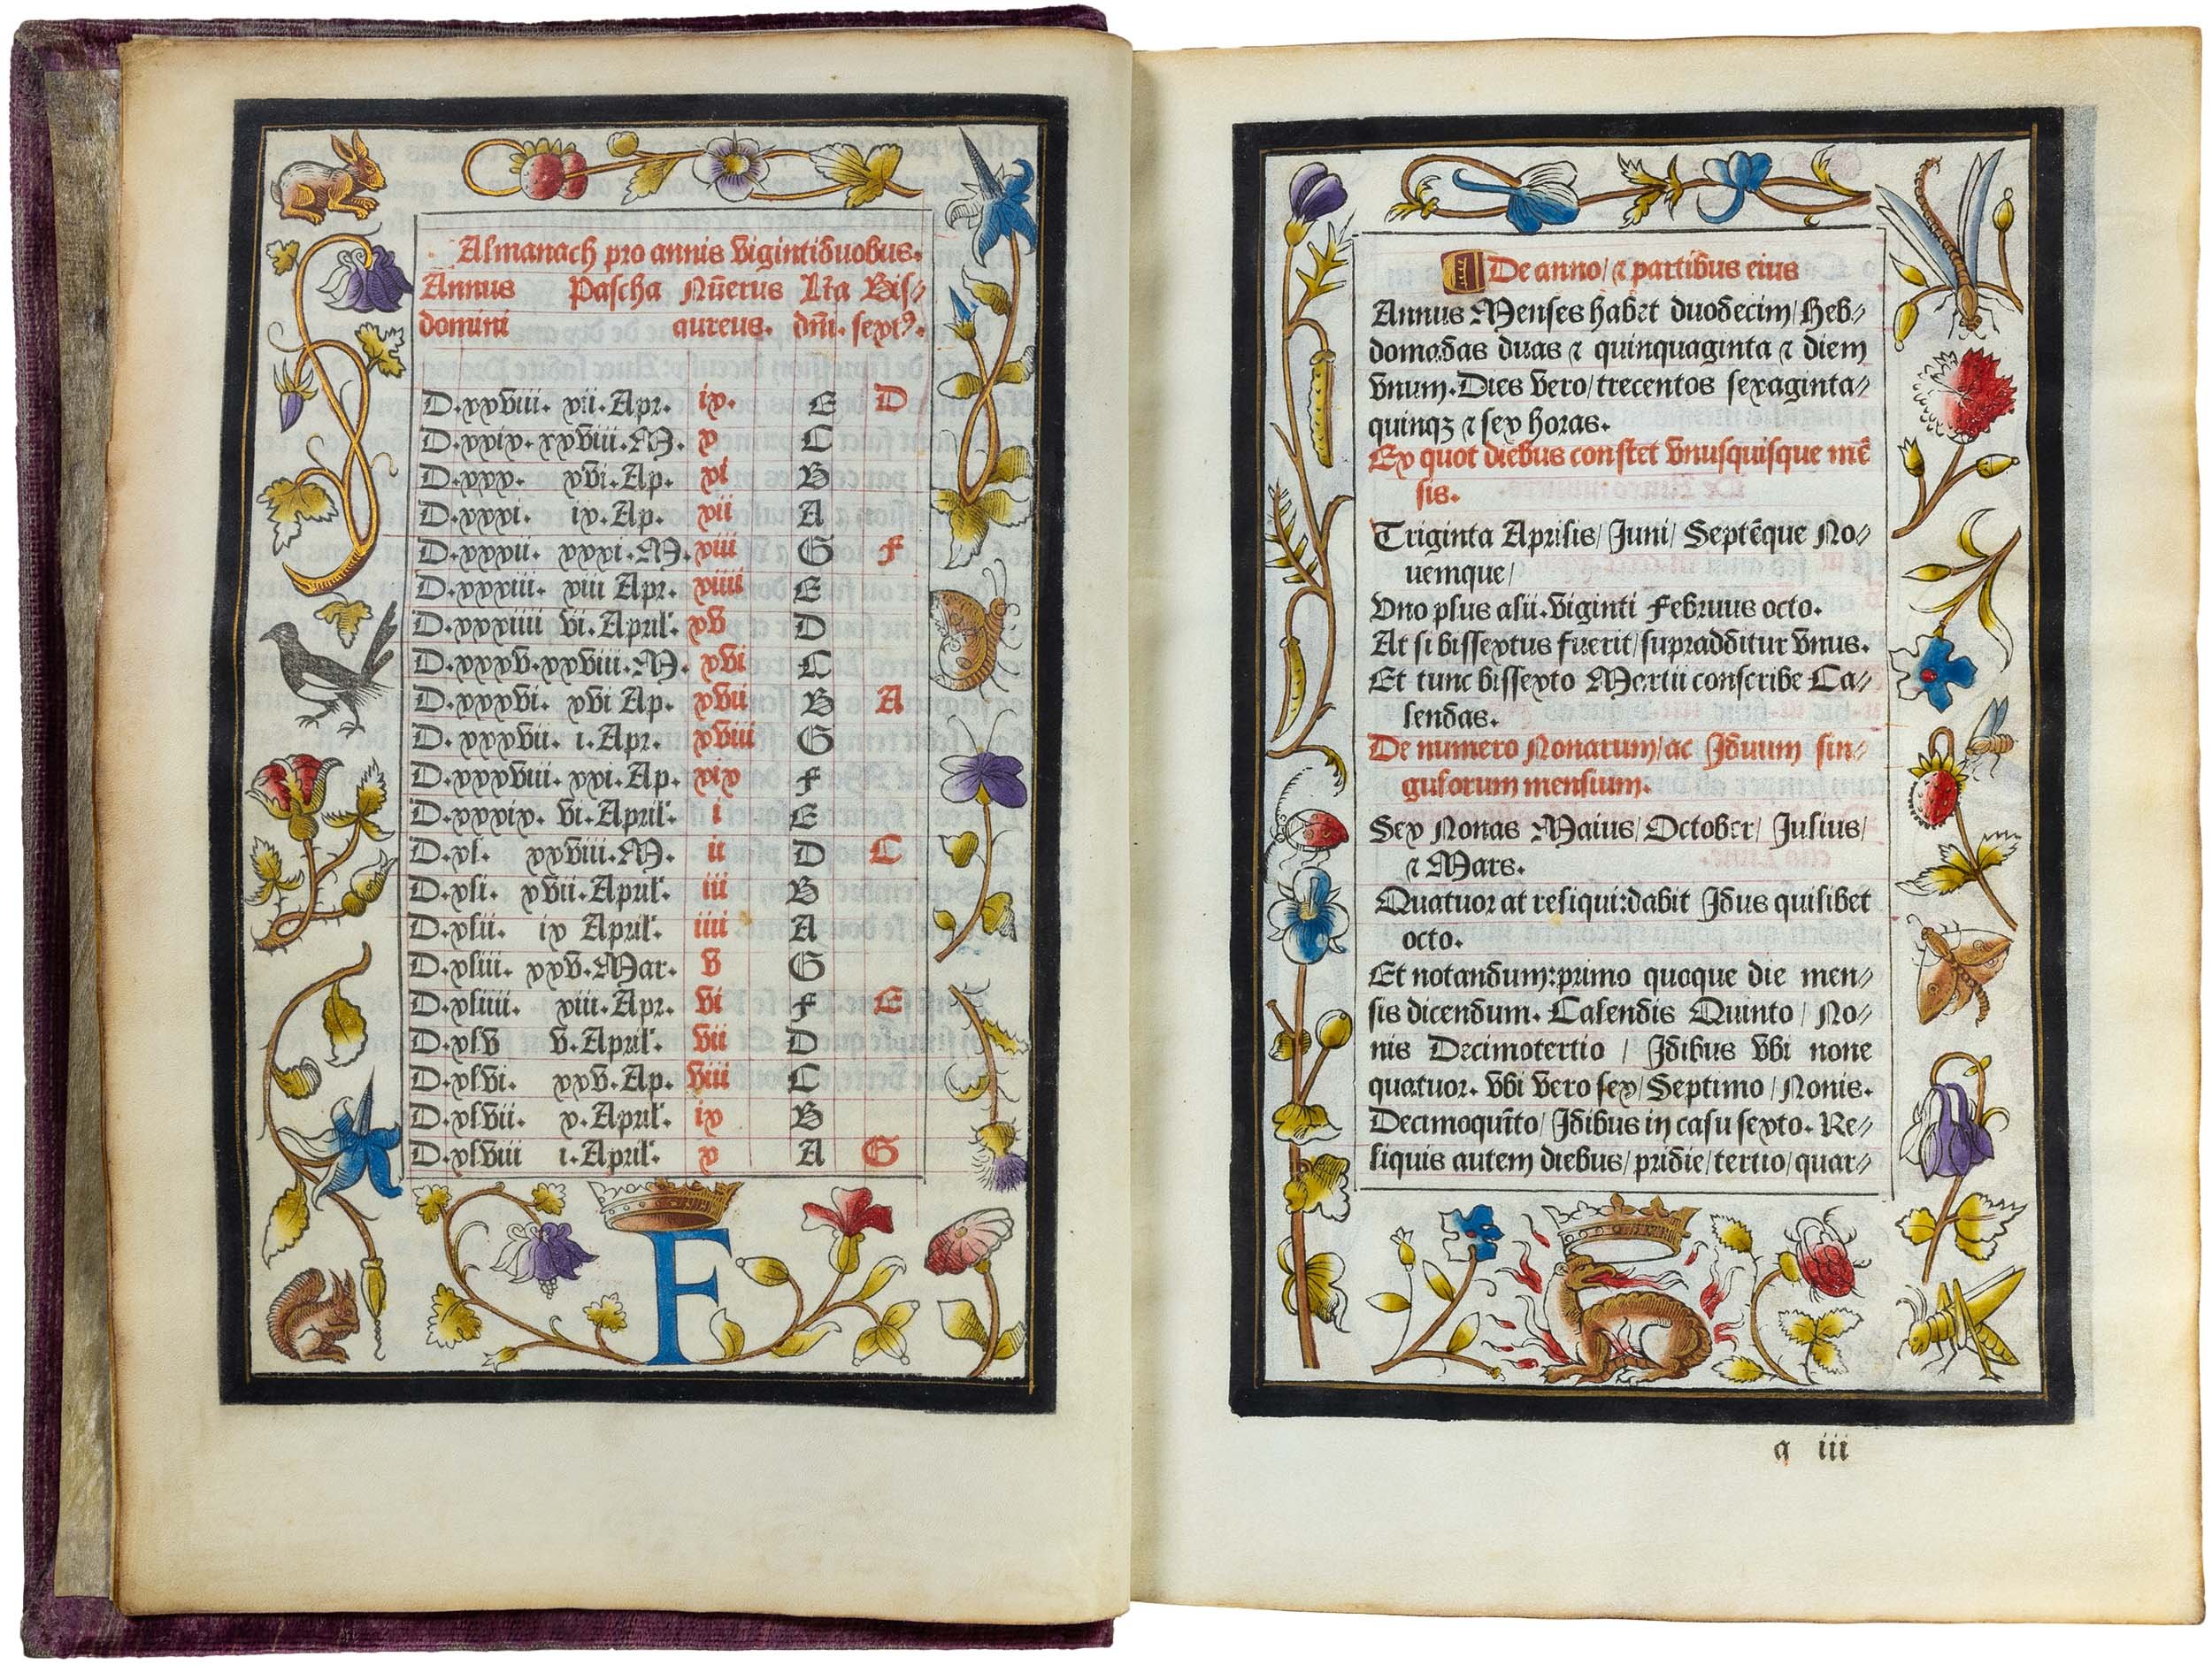 geoffroy-tory-printed-book-of-hours-illuminated-vellum-22-october-1527-prince-dessing-villeneuve-horae-bmv-05.jpg